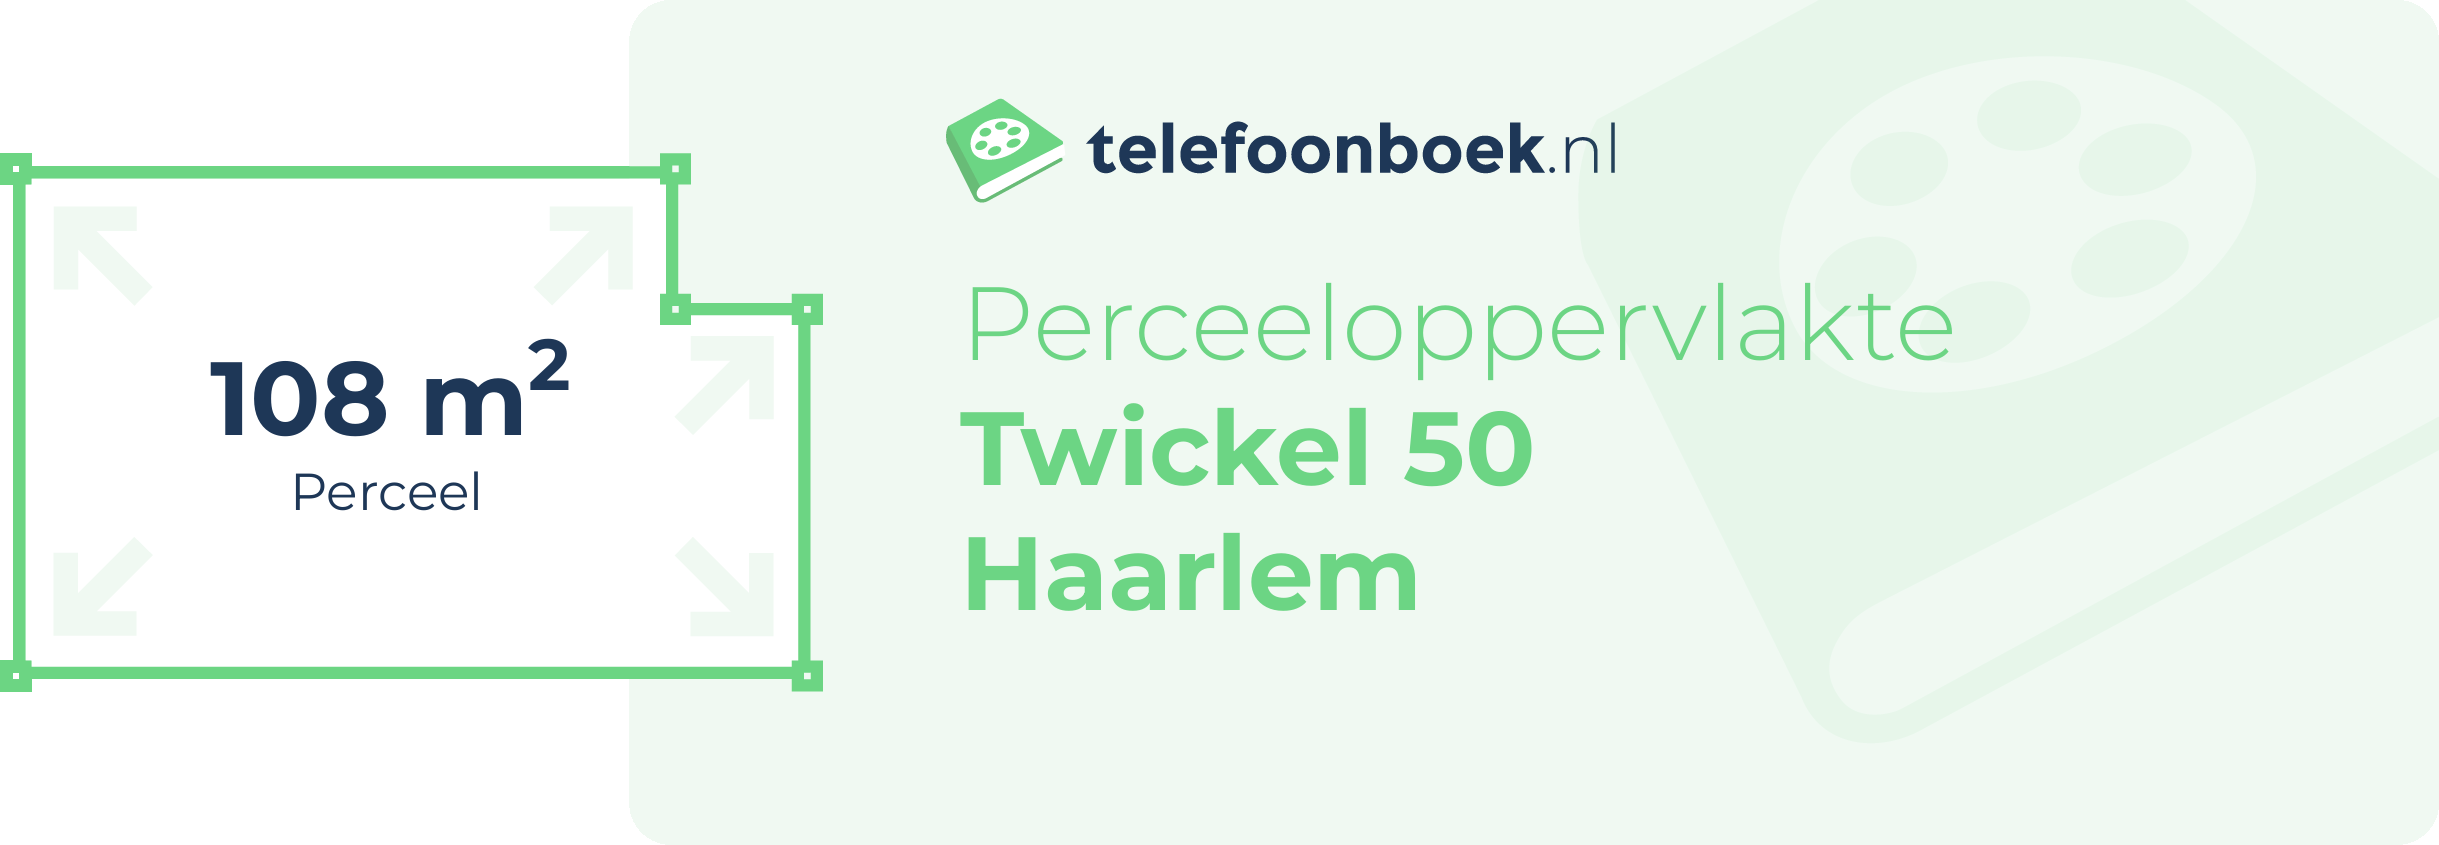 Perceeloppervlakte Twickel 50 Haarlem